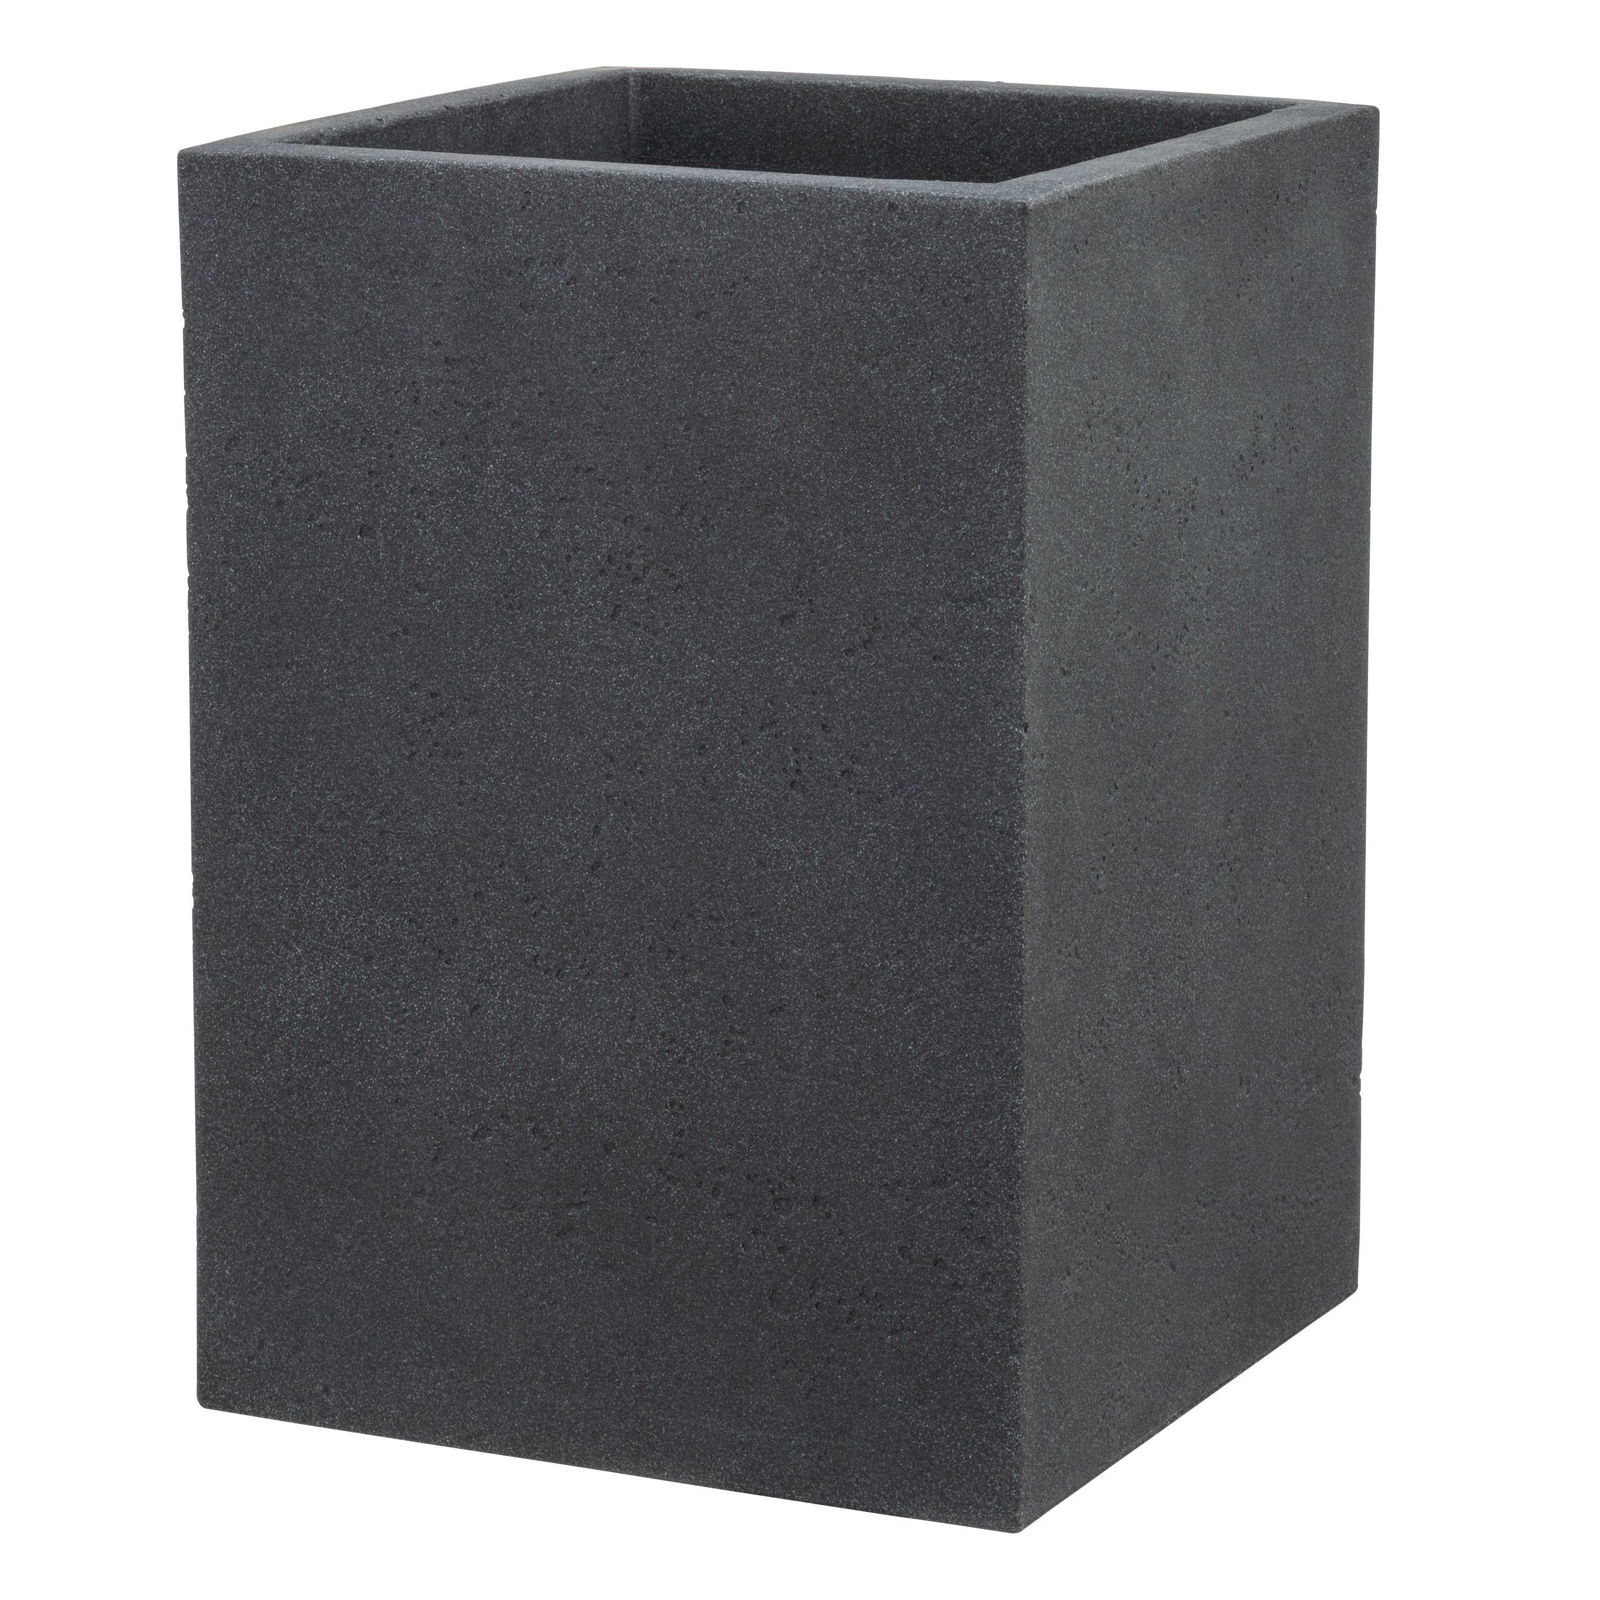 Pflanzkübel 'C-Cube High', Stony Black, 38 x 38 x H 54 cm, 26 Liter